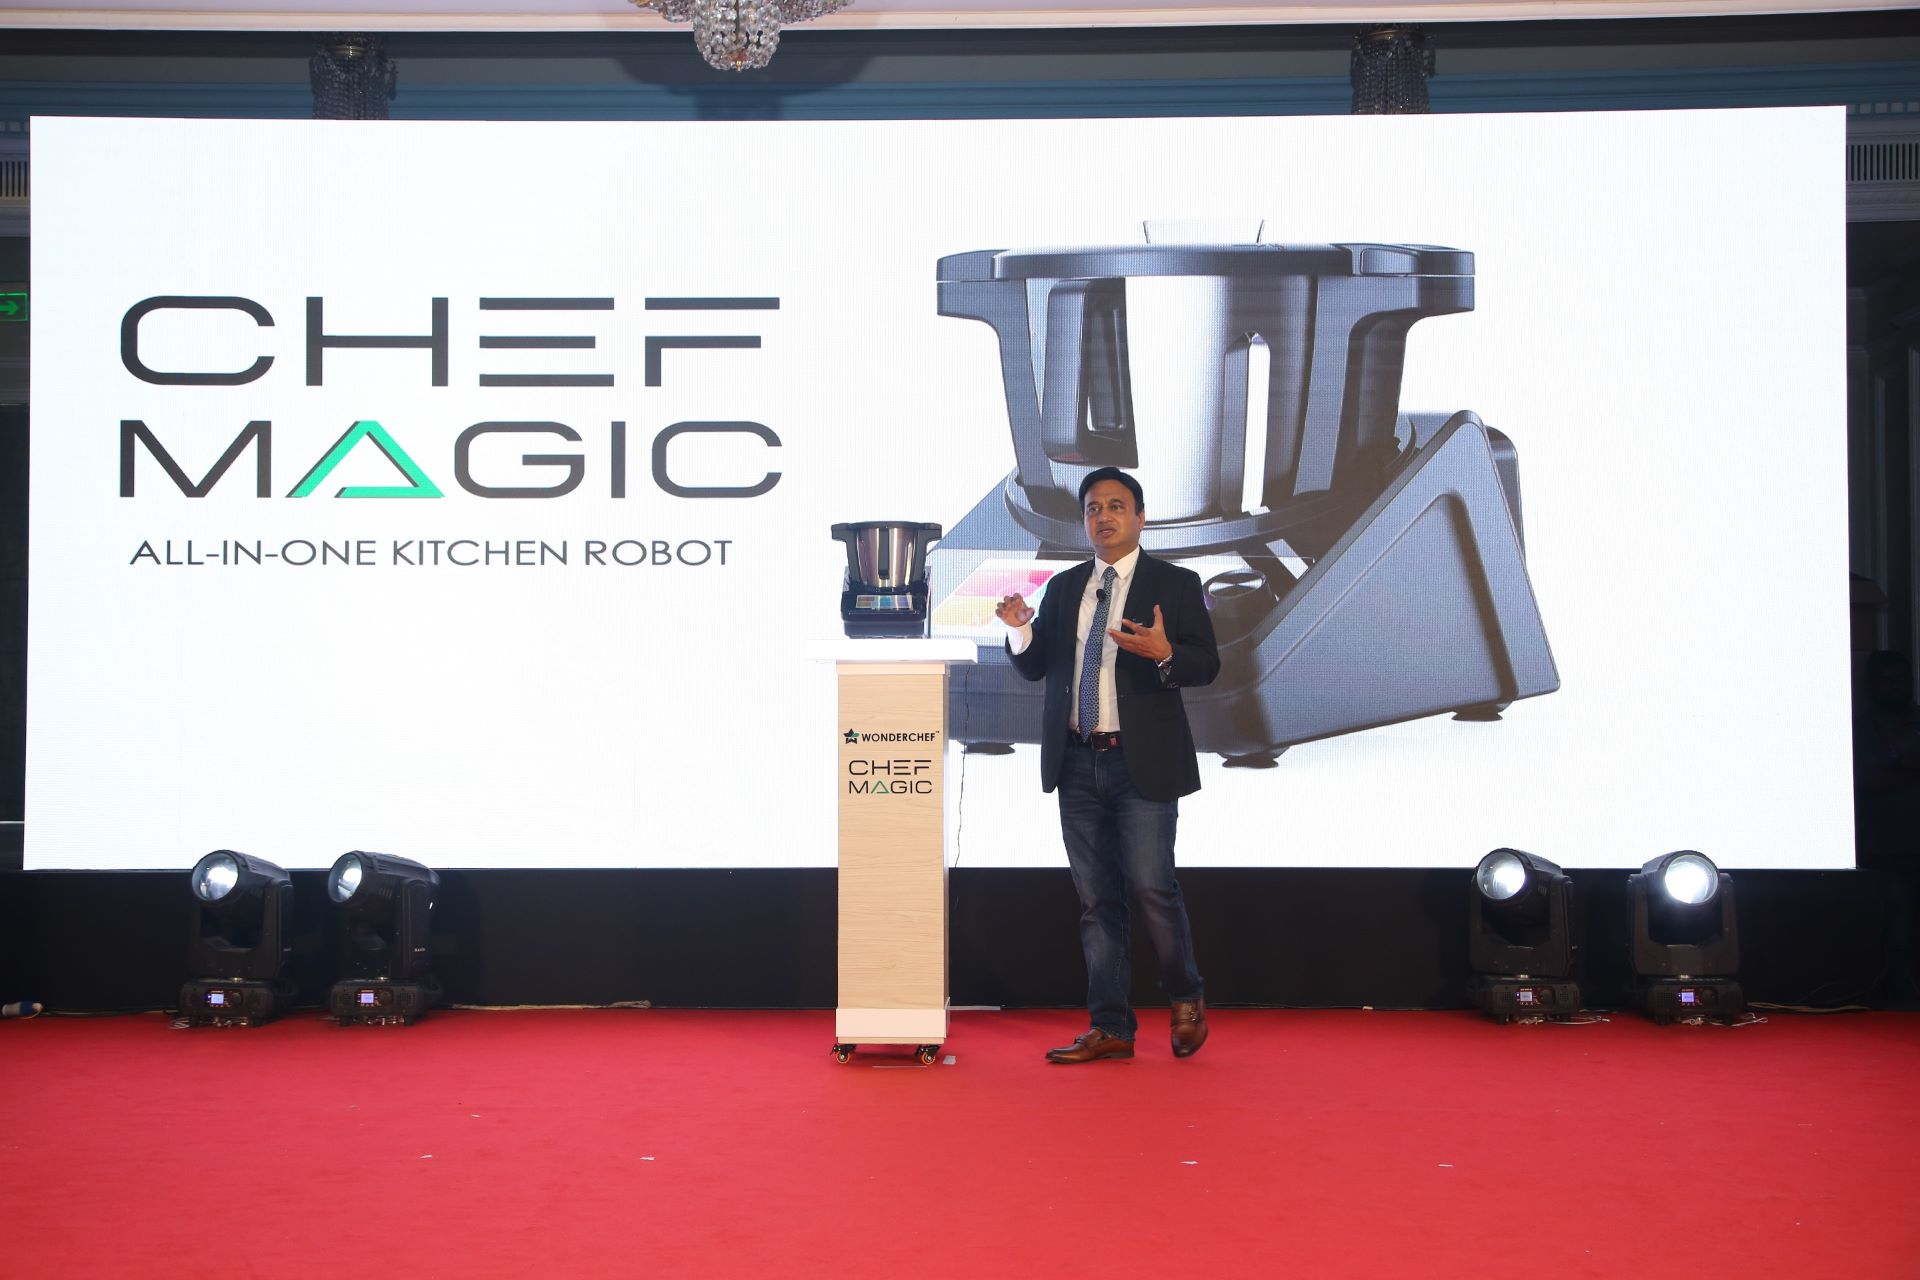 Wonderchef Launches Chef Magic, a Revolutionary Kitchen Robot